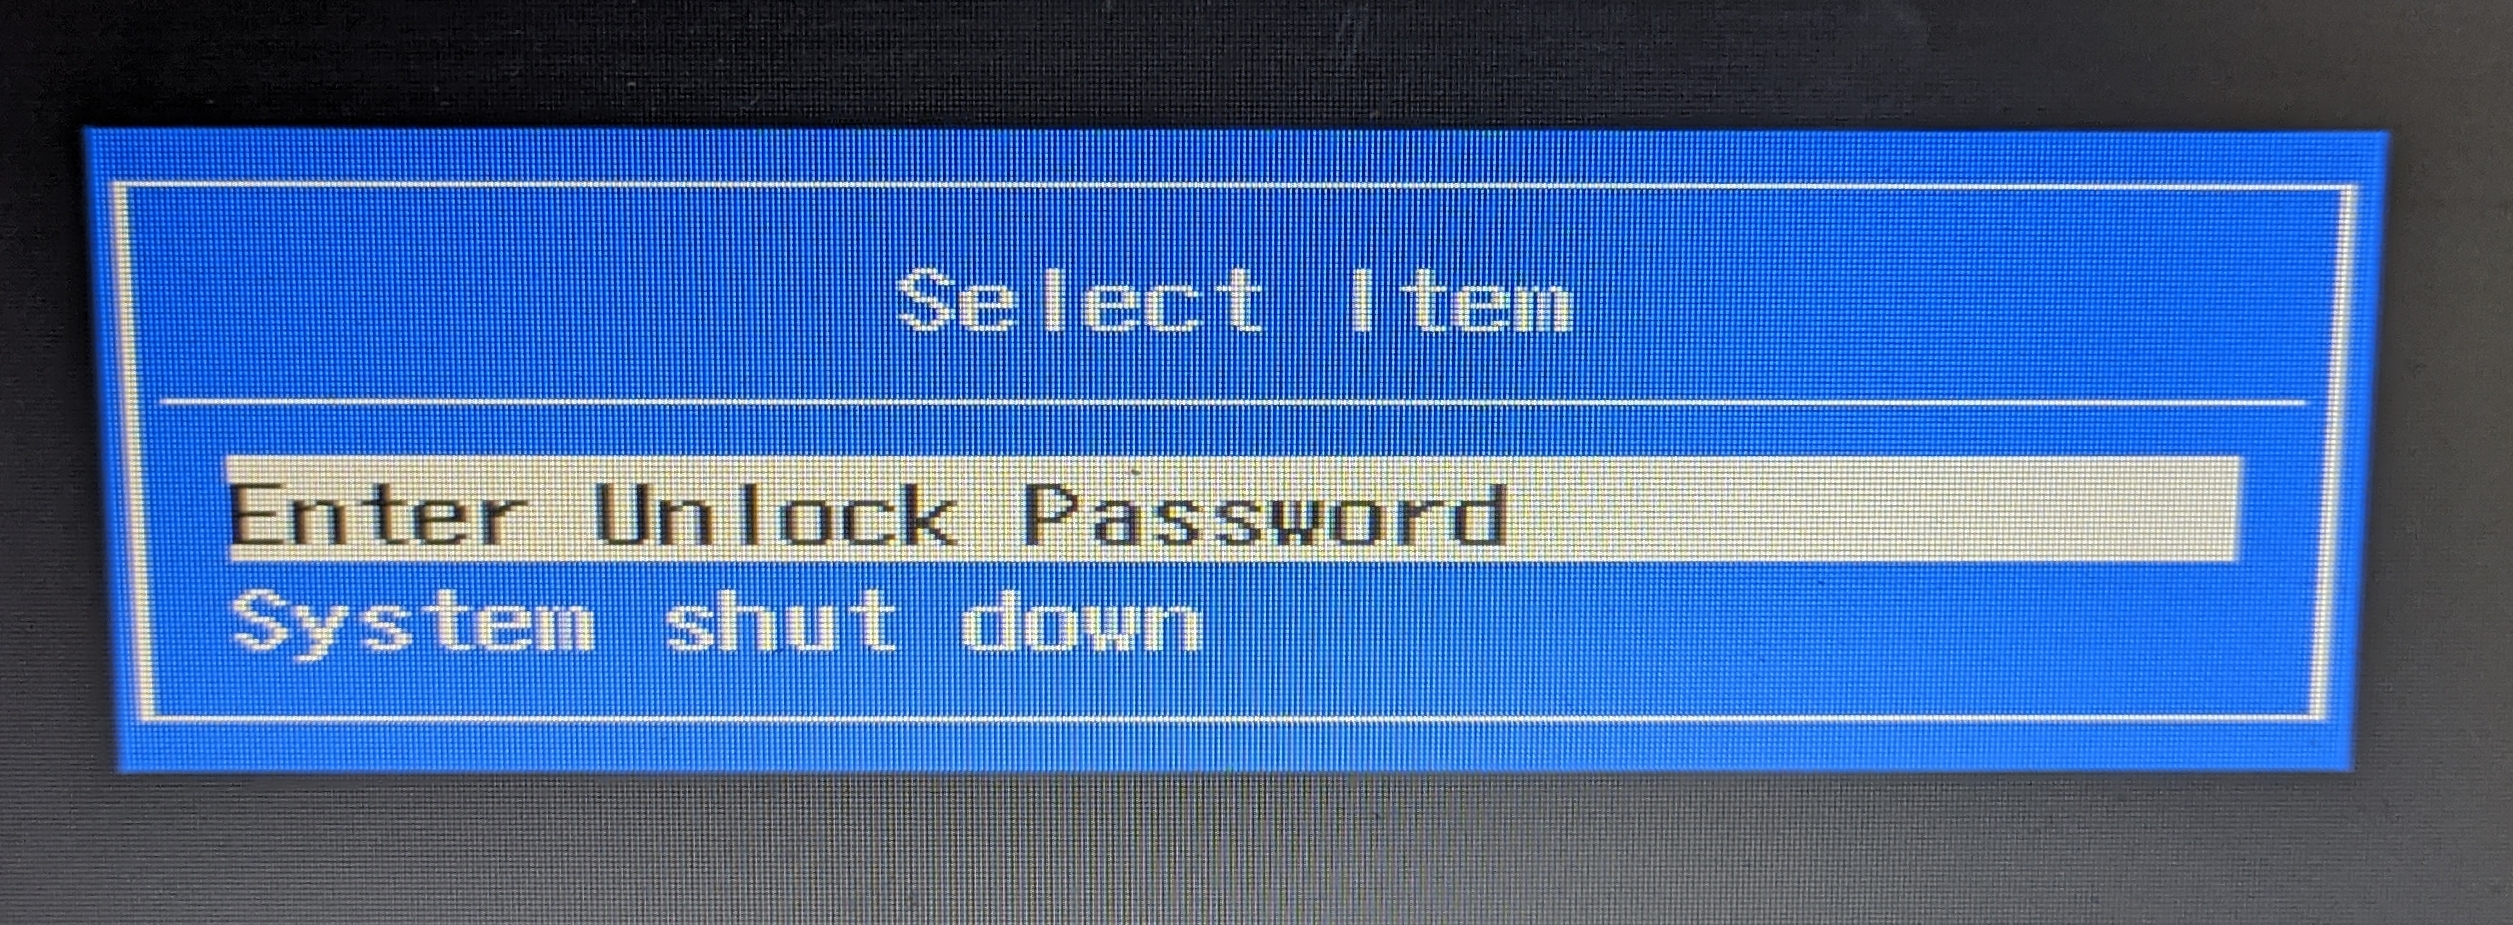 Is this password to enter. Enter password. Биос enter password. Пароль enter password на загрузку. Пароль enter Unlock password пароль забыл.